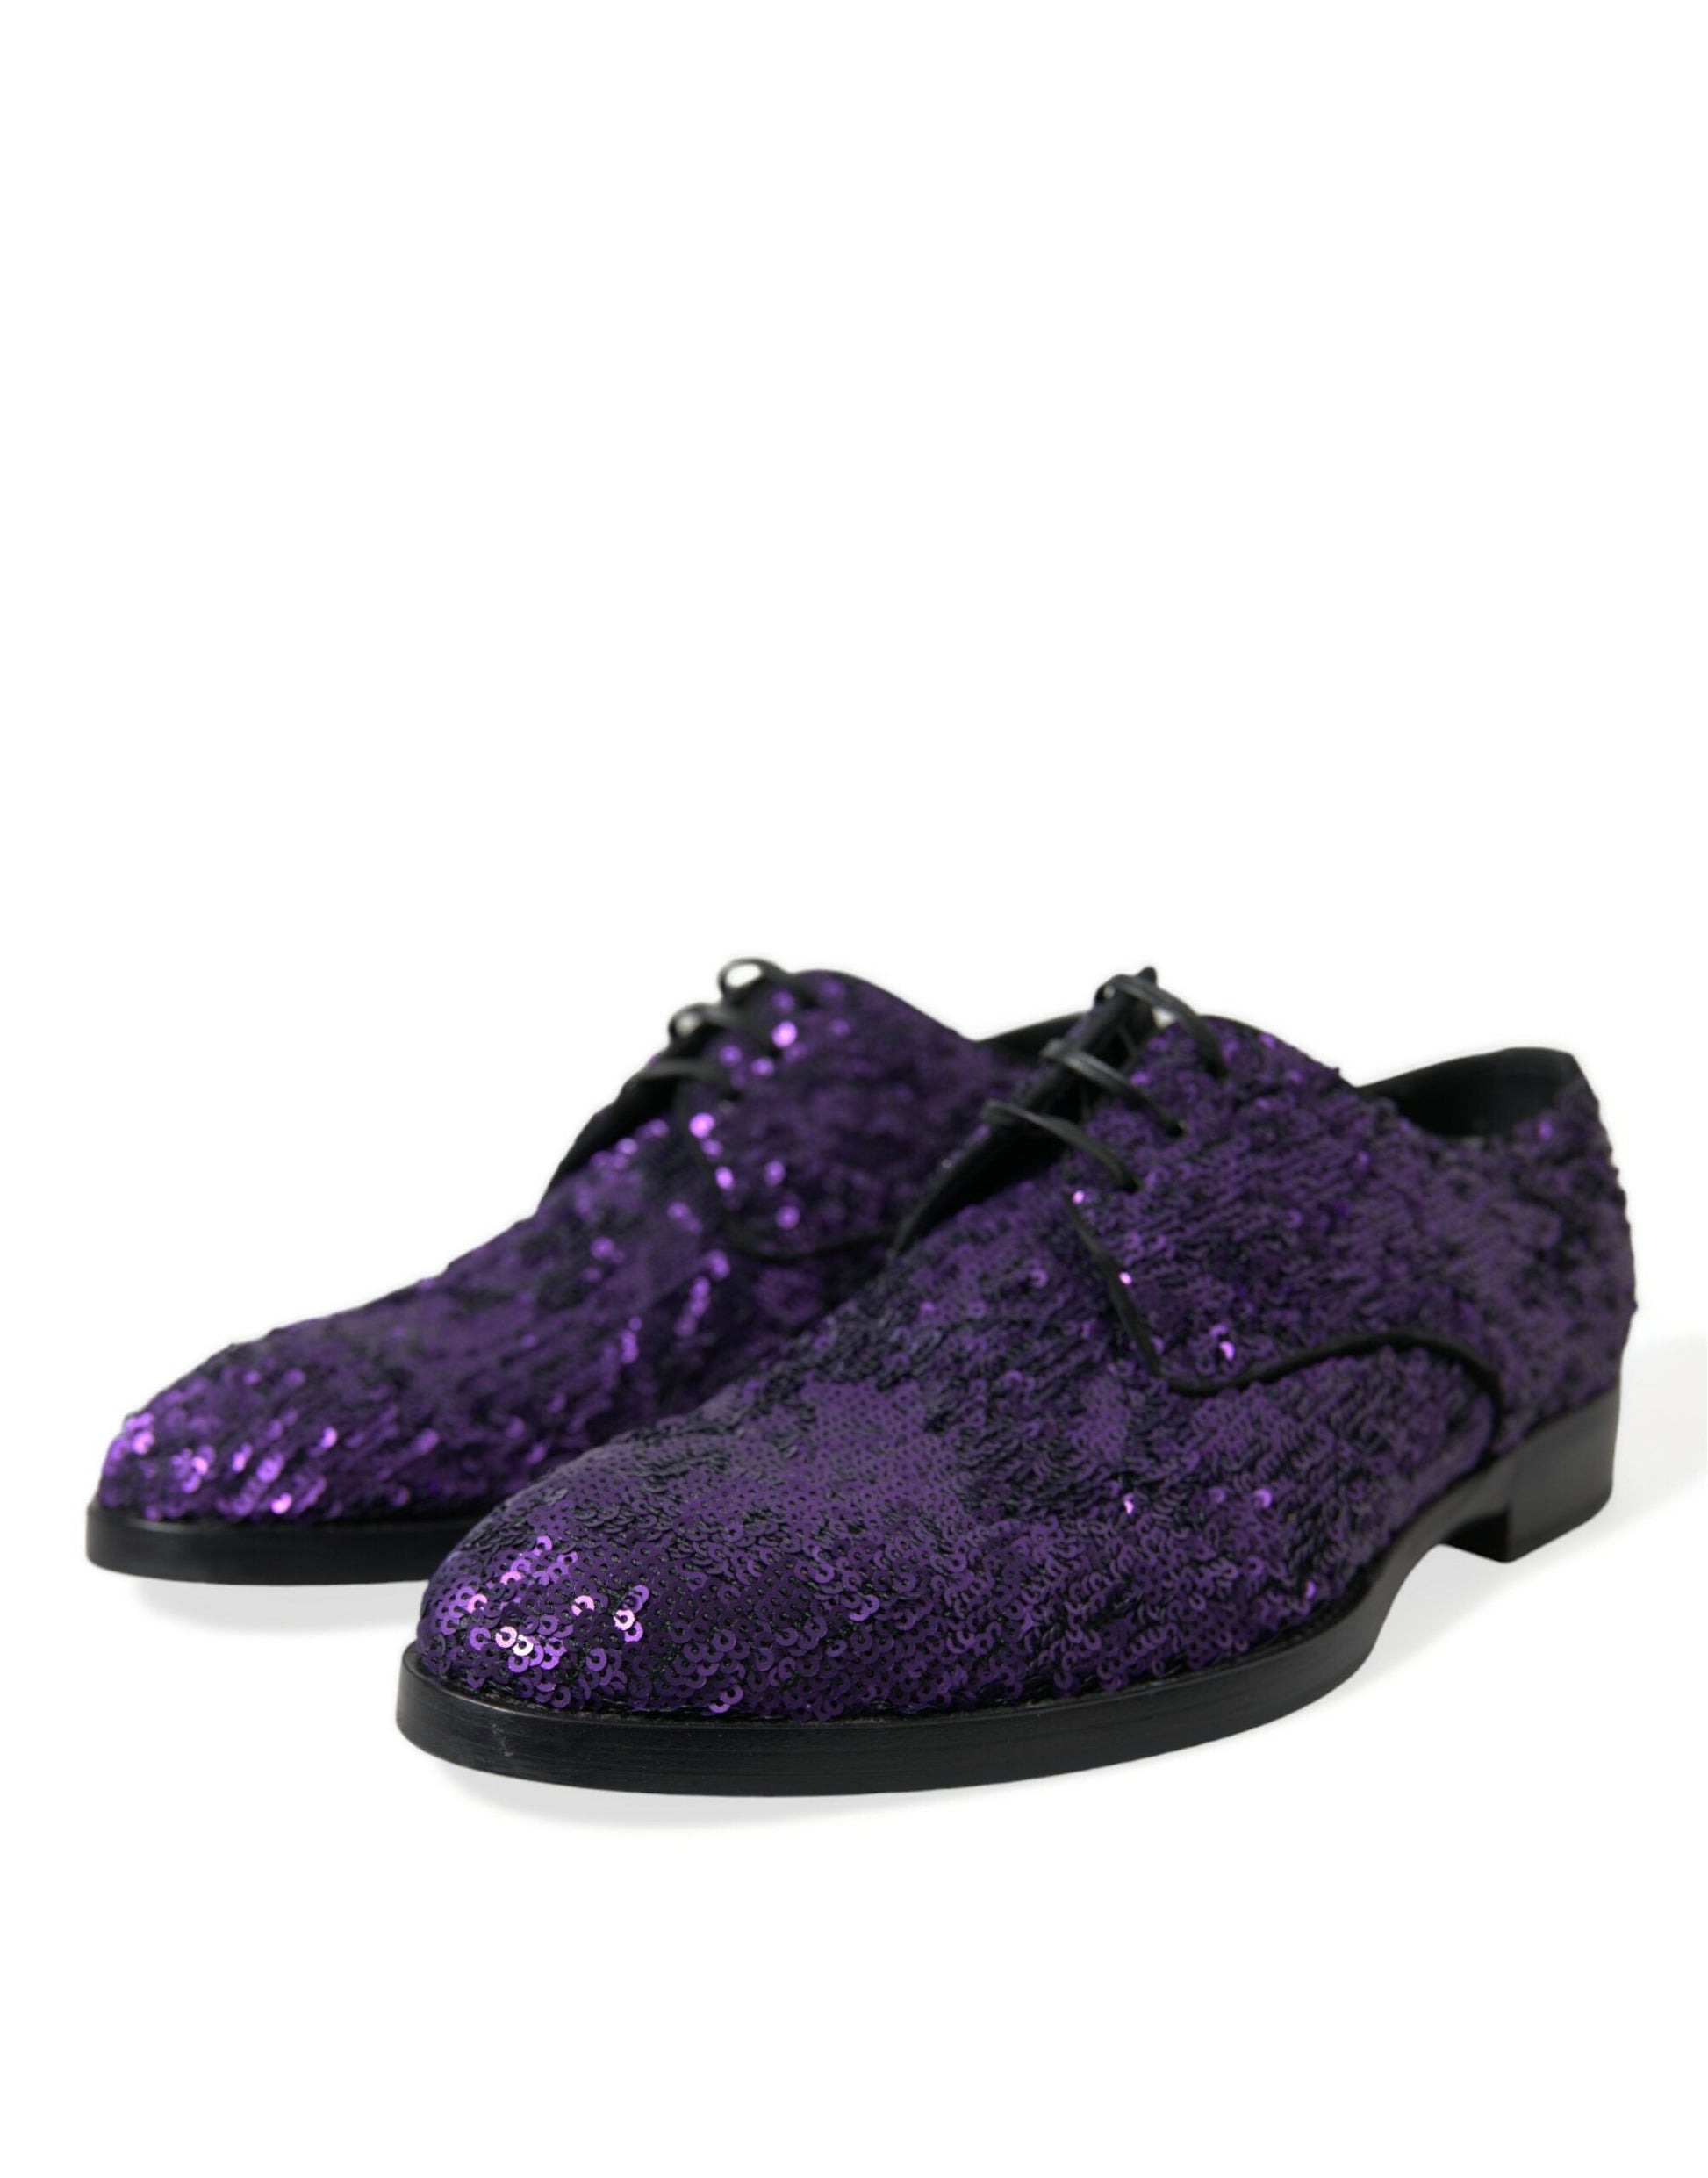 Dolce & Gabbana Purple Sequined Lace Up Oxford Dress Shoes | Fashionsarah.com